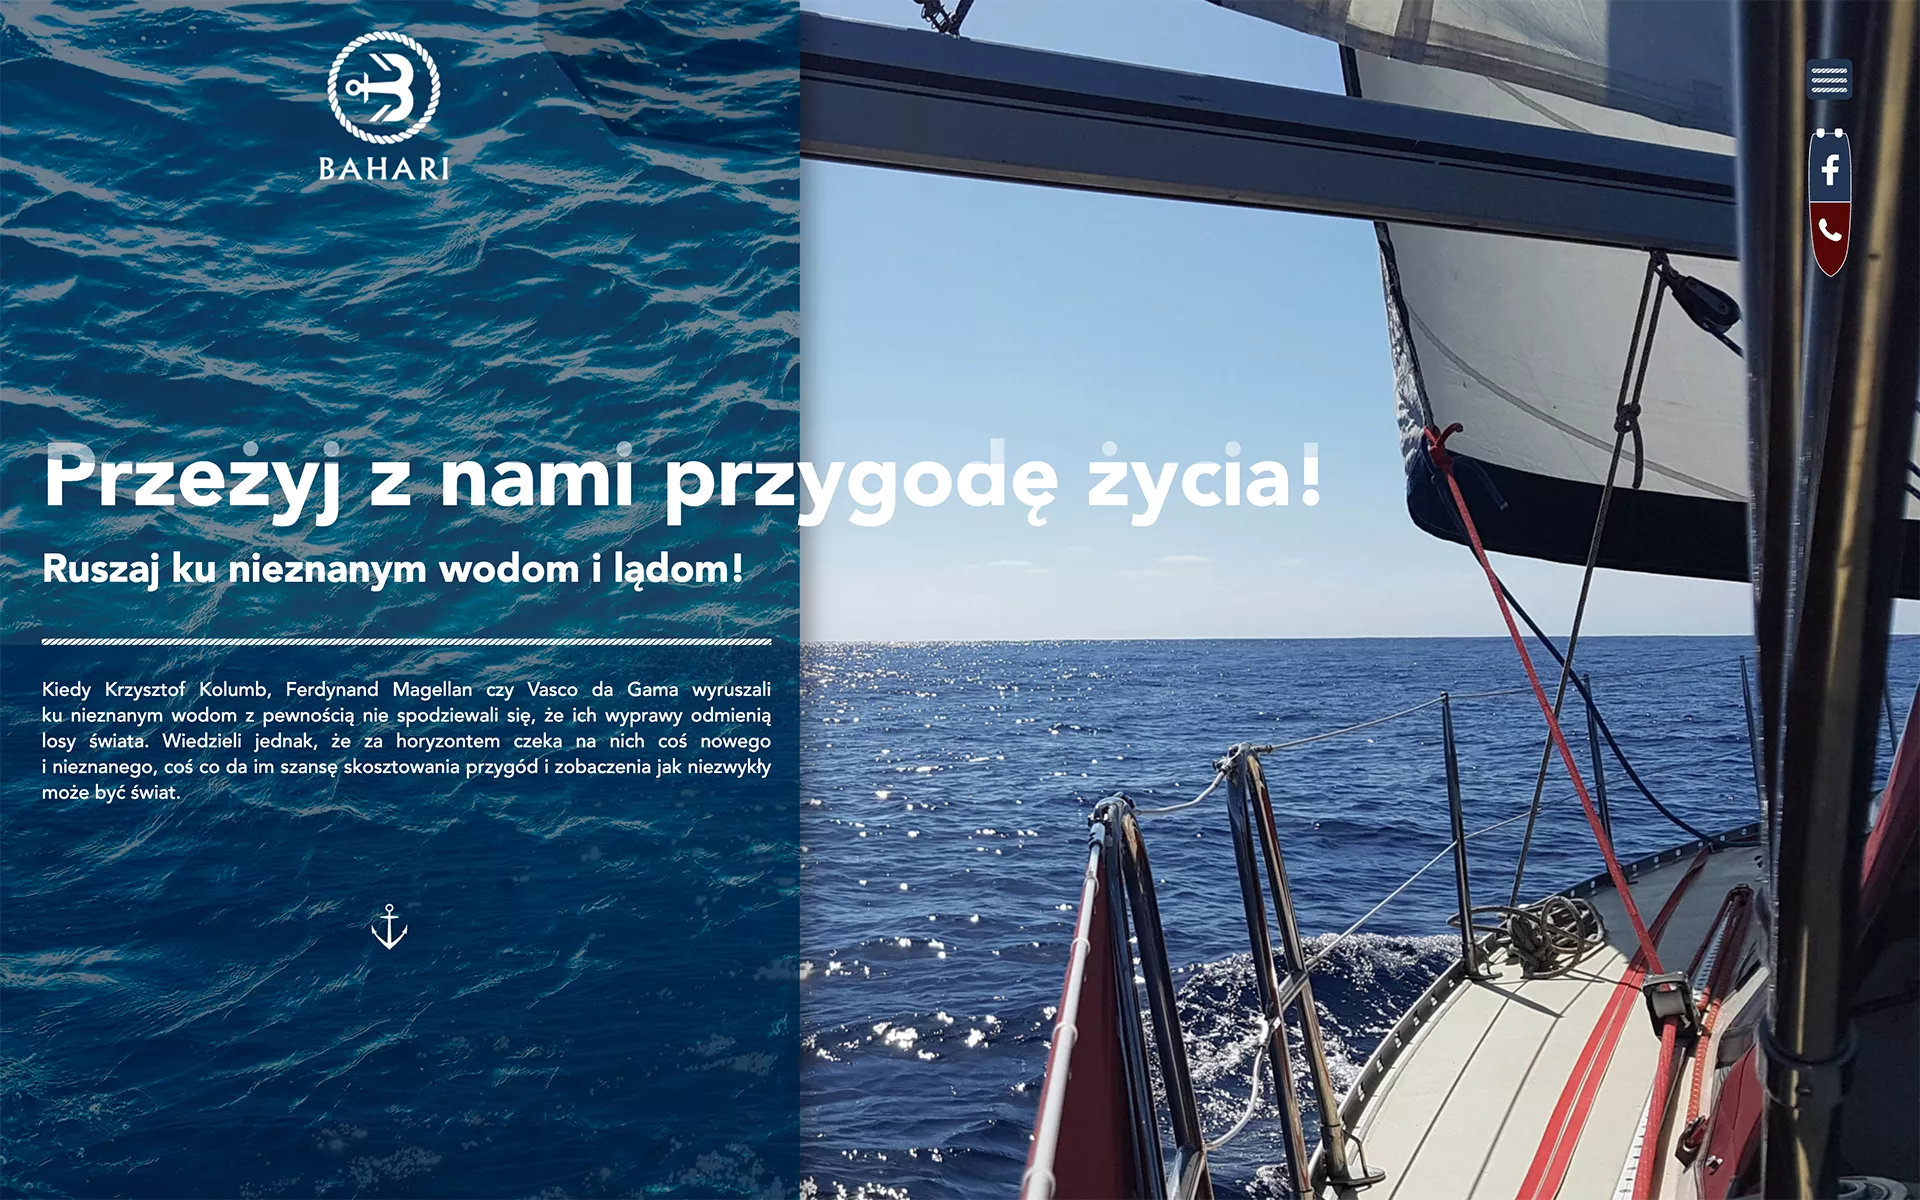 Strona internetowa bahari.pl